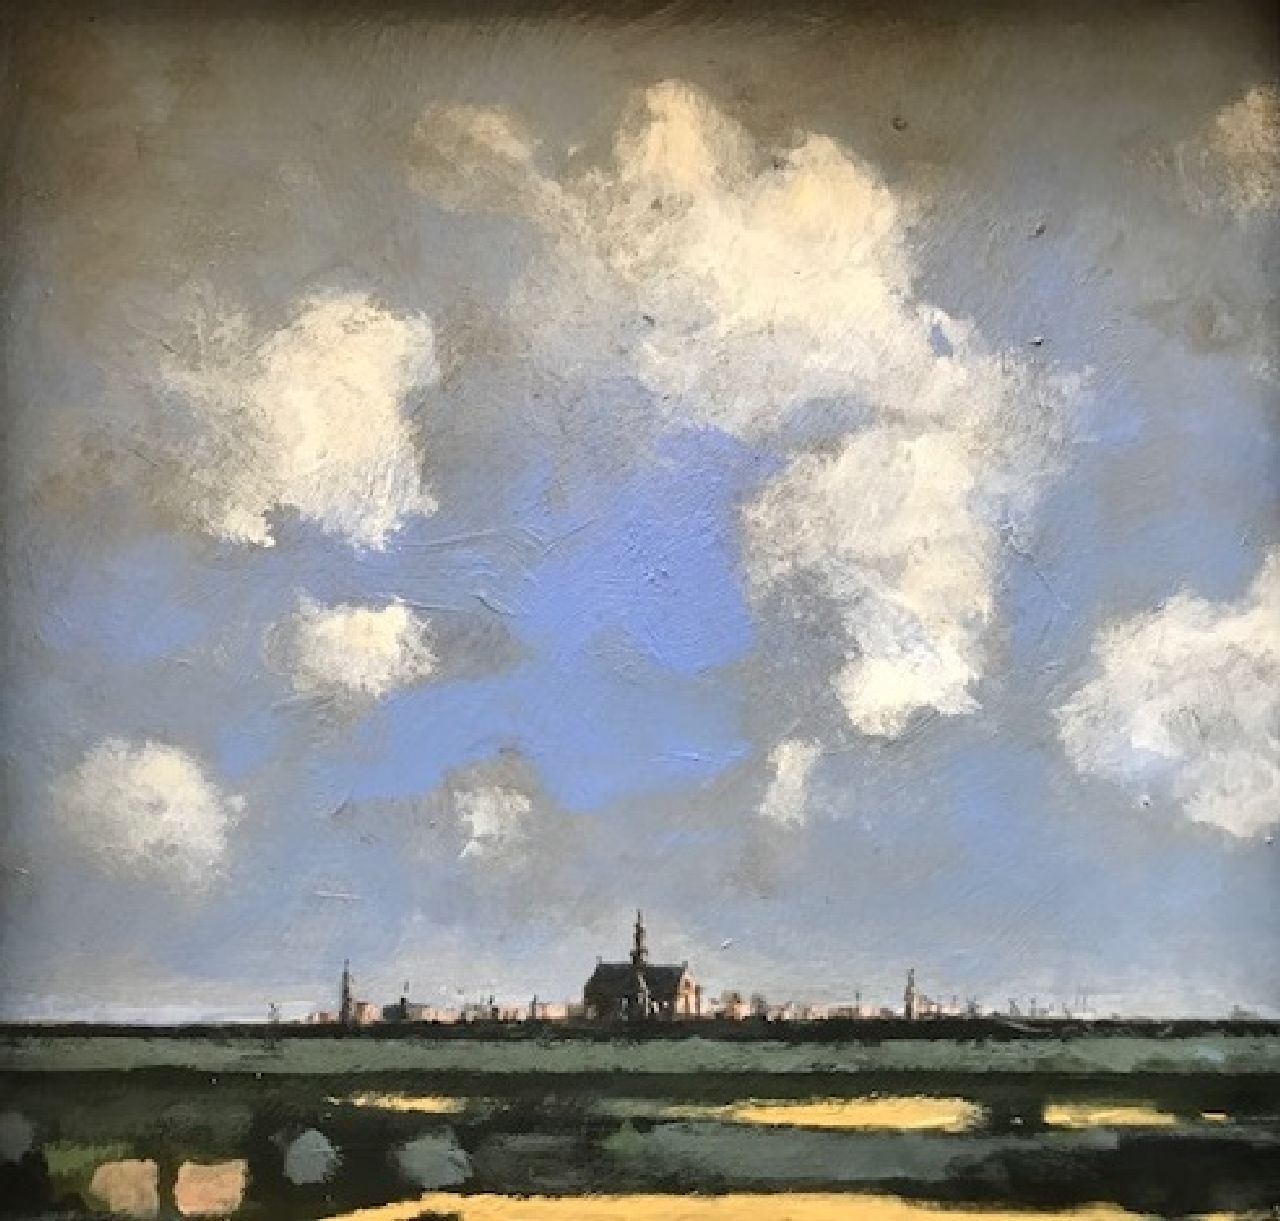 Hemert E. van | Evert van Hemert, Evert's Ruysdael, acrylic on board 30.0 x 29.5 cm, gesigneerd rechtsonder Van Hemert's Ruysdael